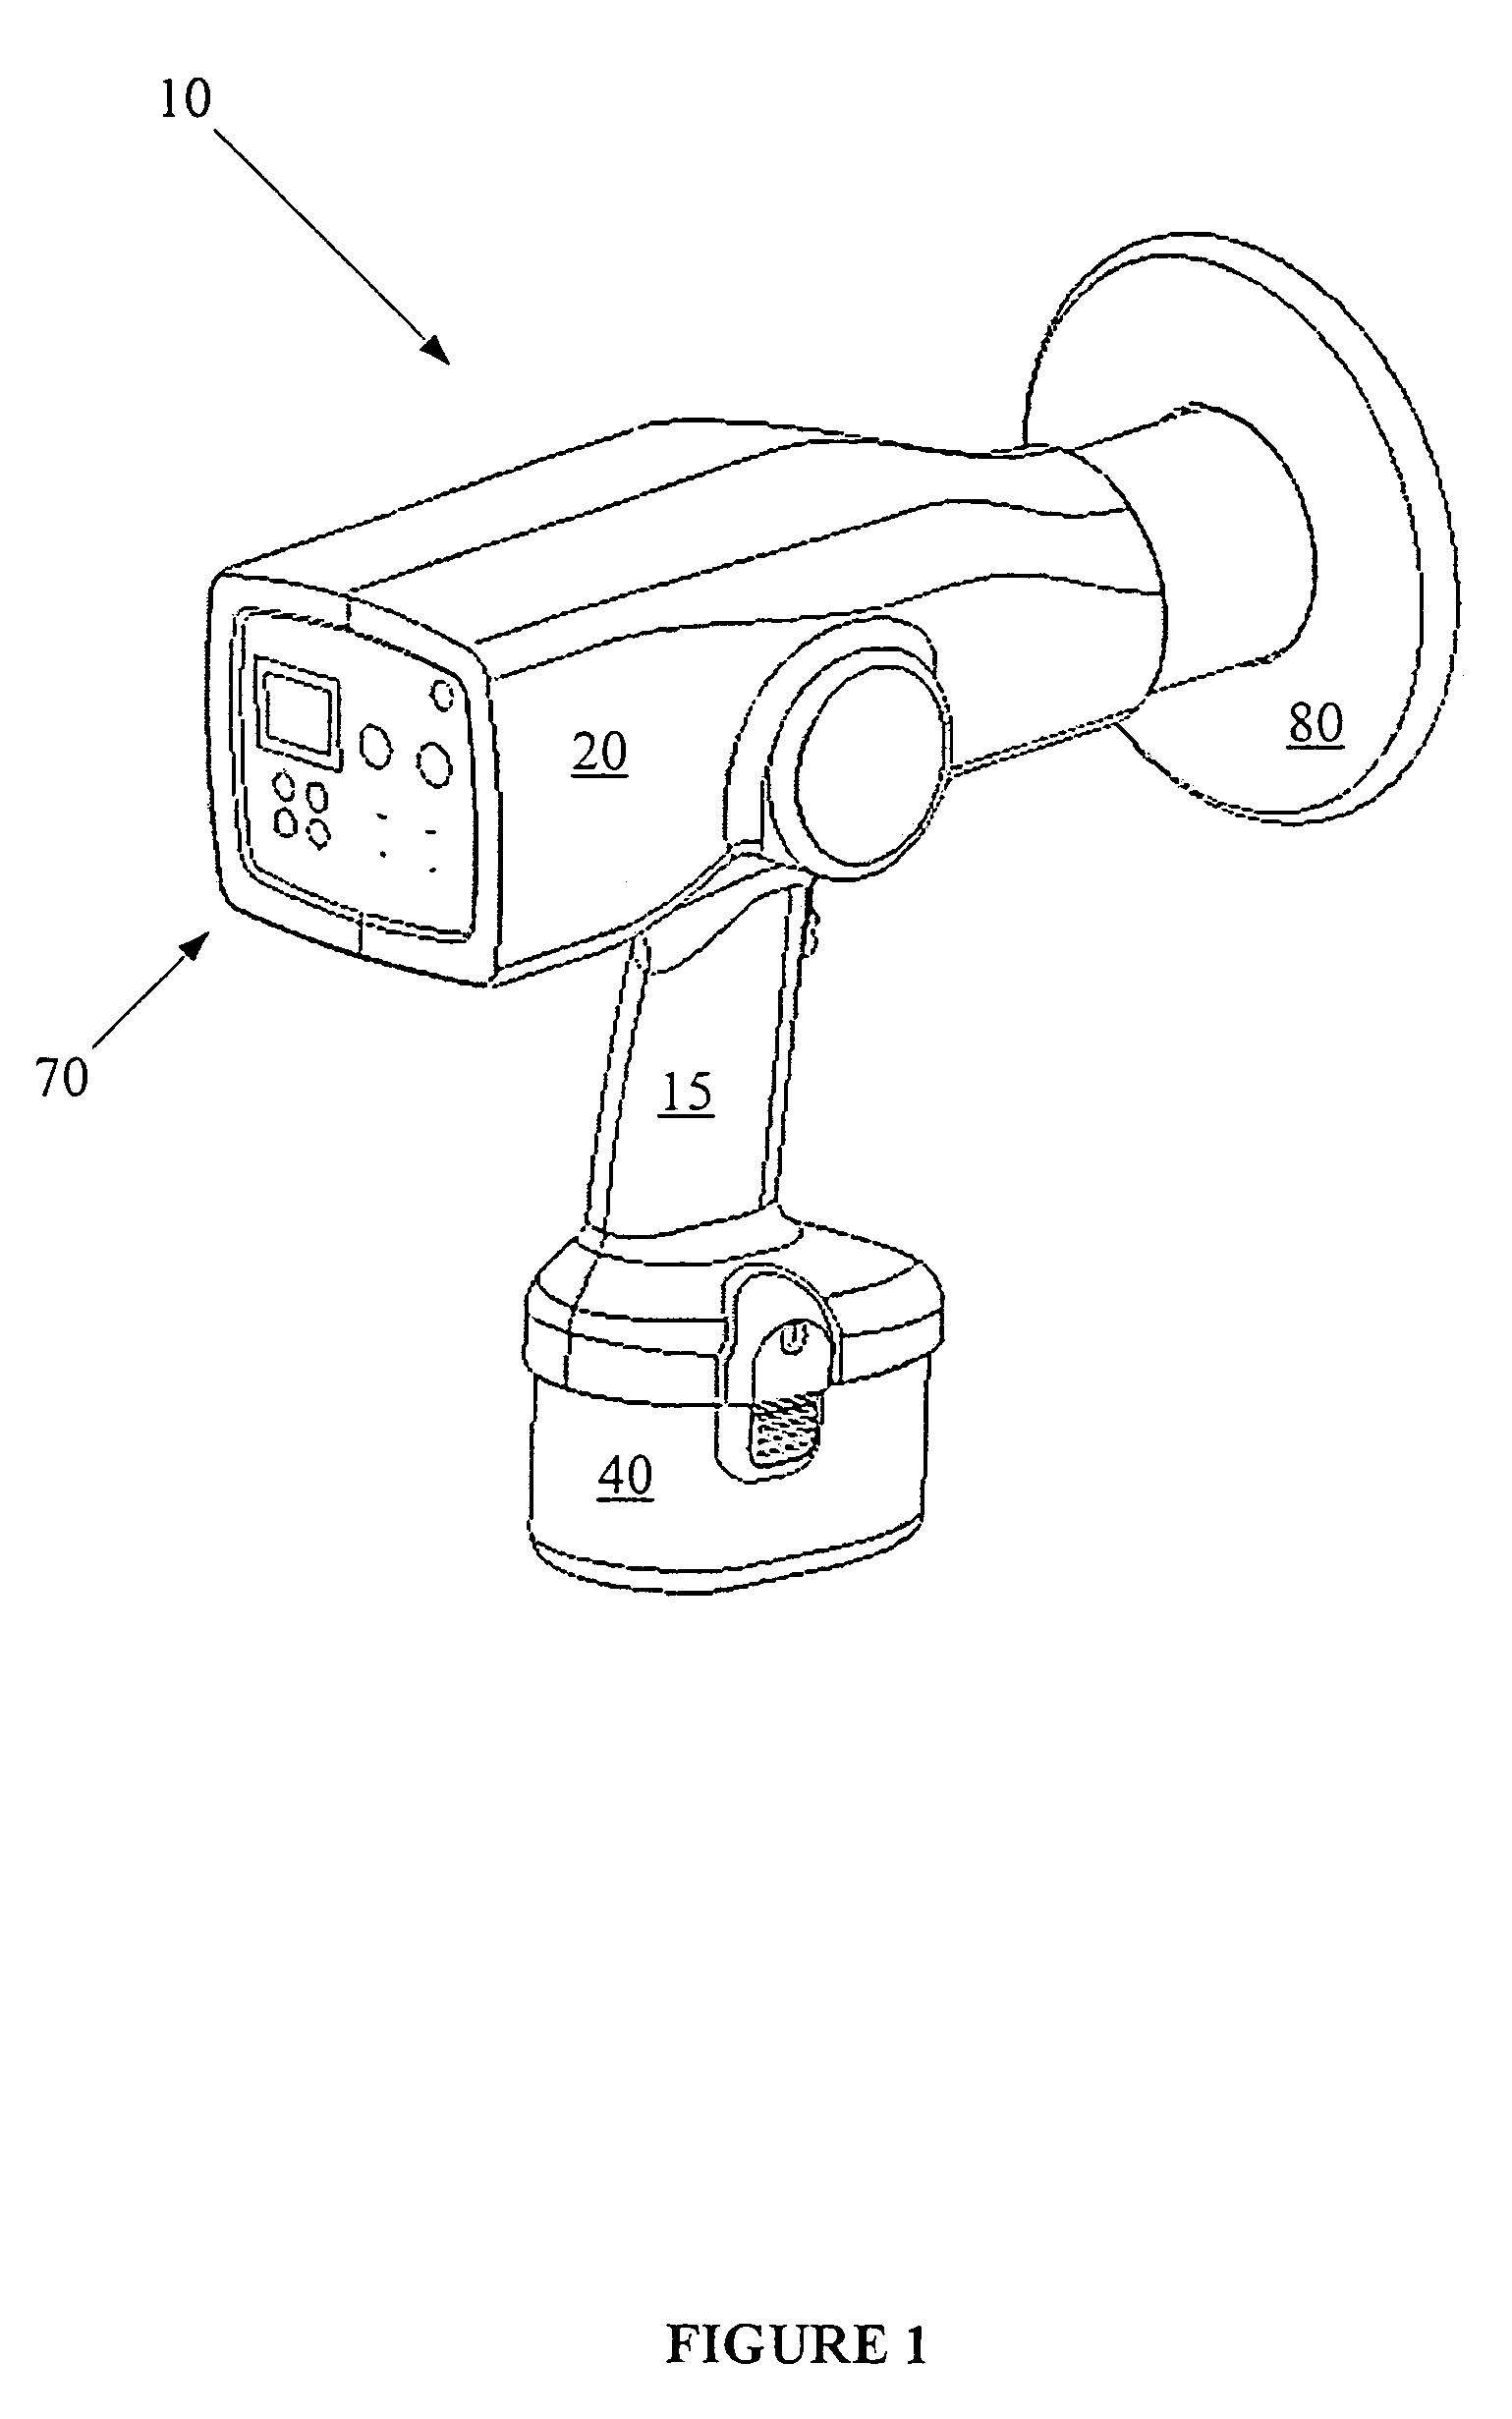 Digital x-ray camera